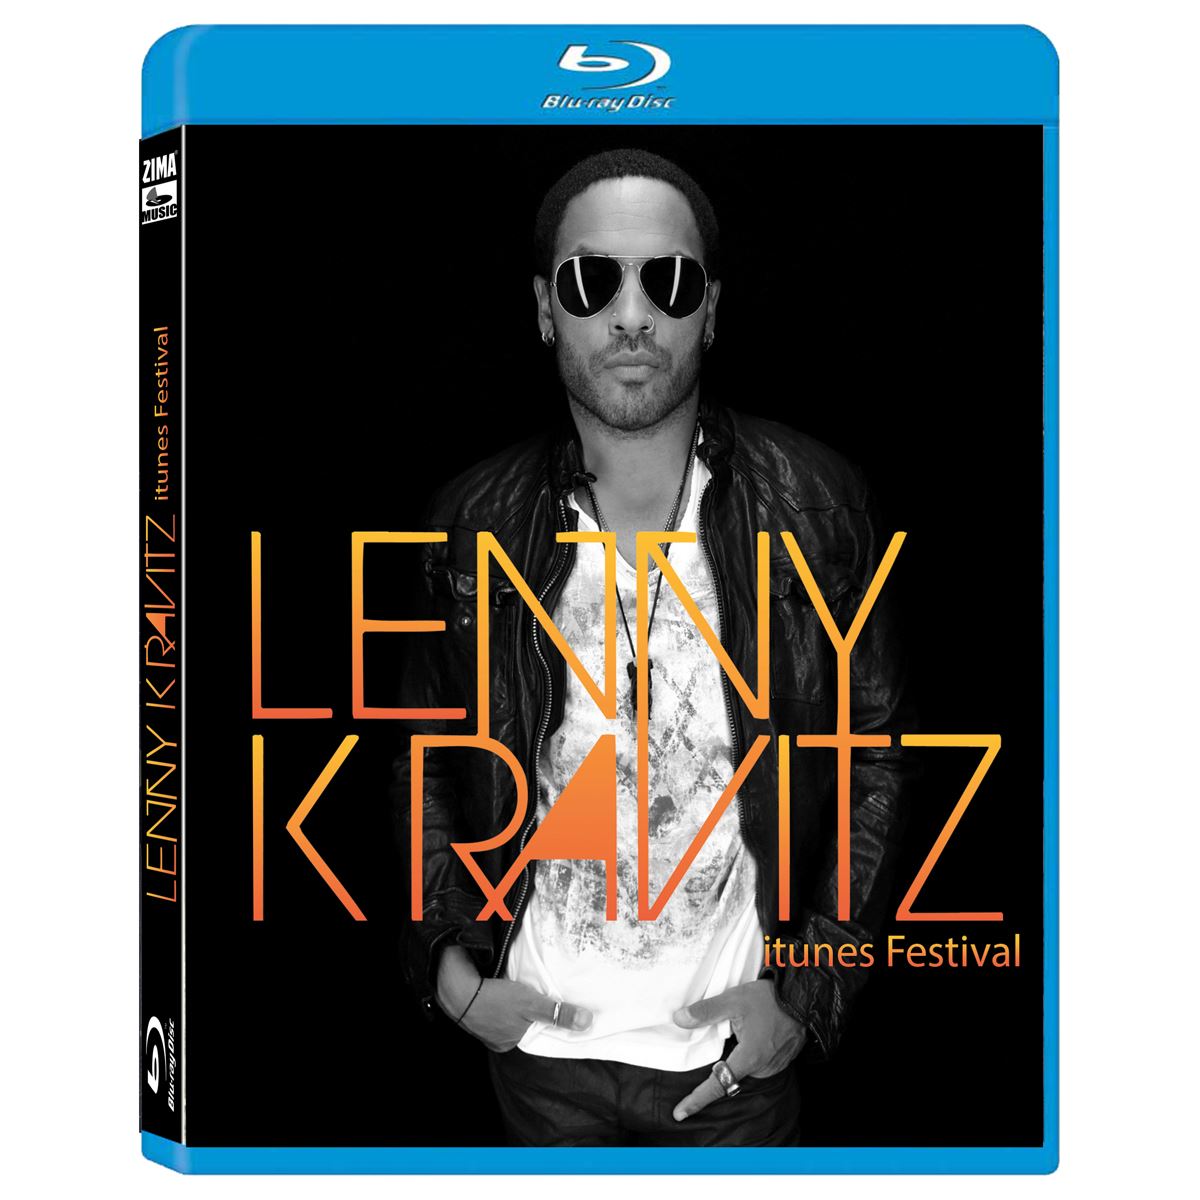 Lenny Kravitz Live At iTunes Festival